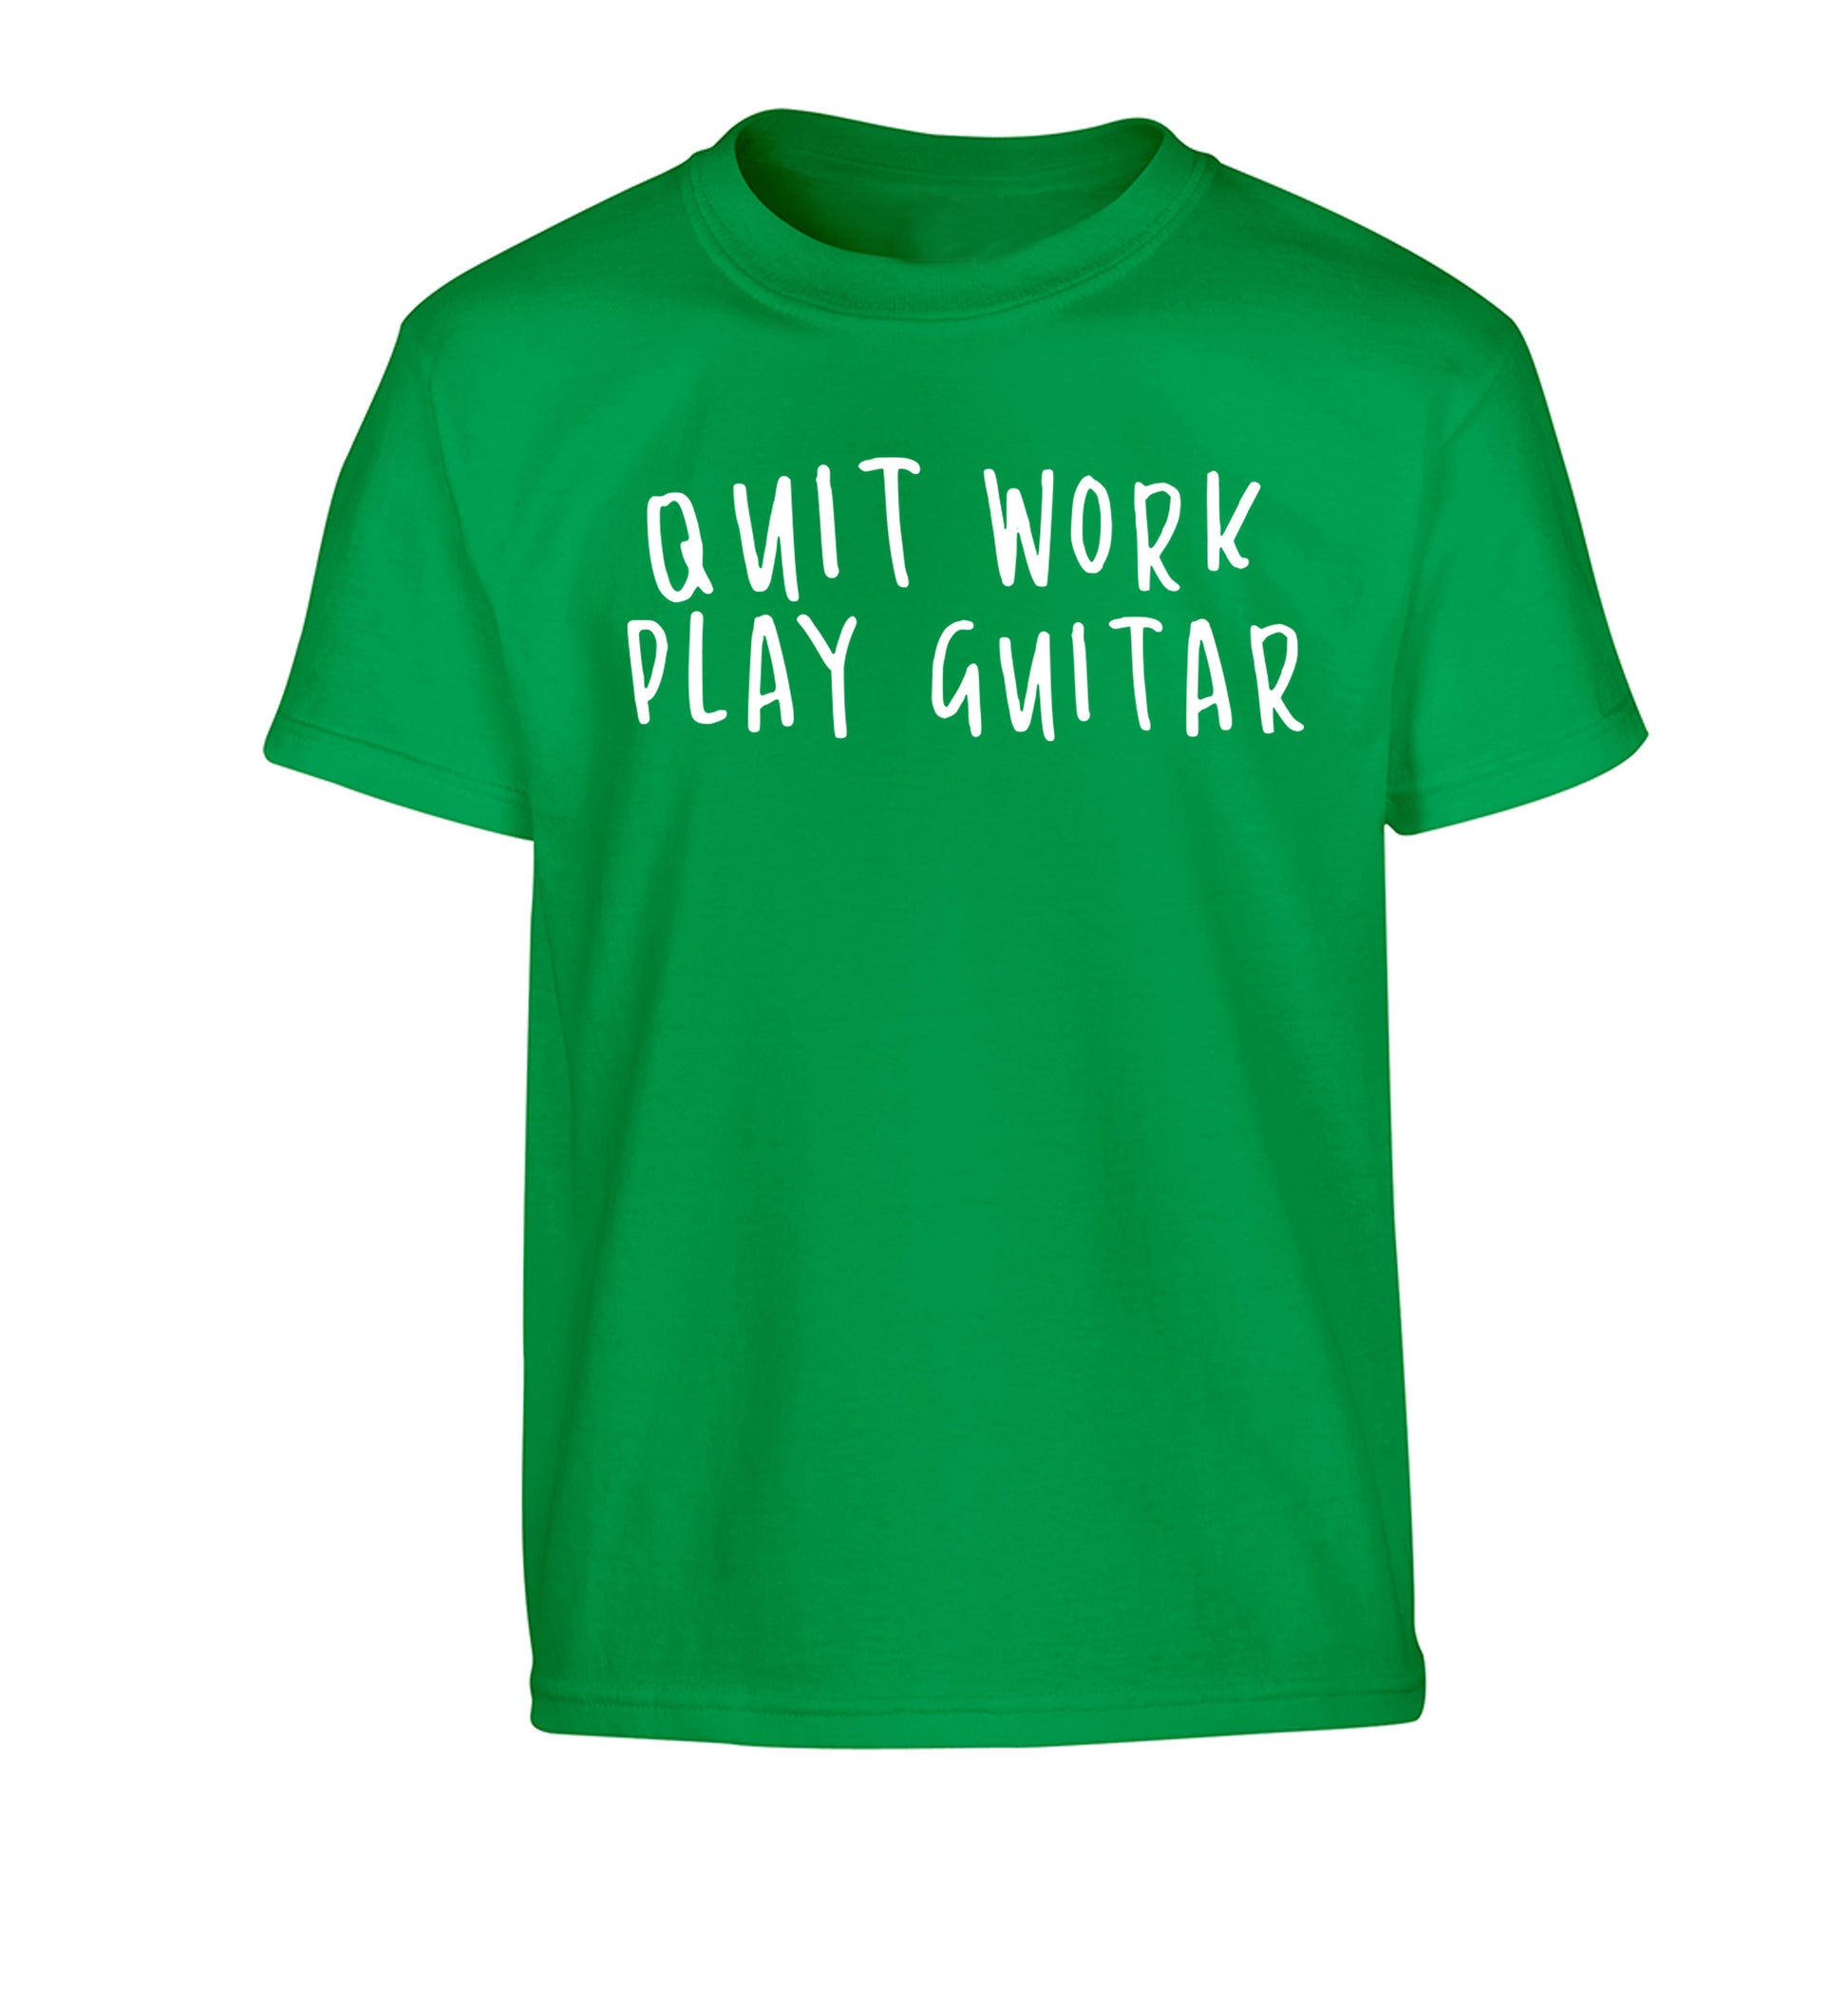 Quit work play guitar Children's green Tshirt 12-14 Years